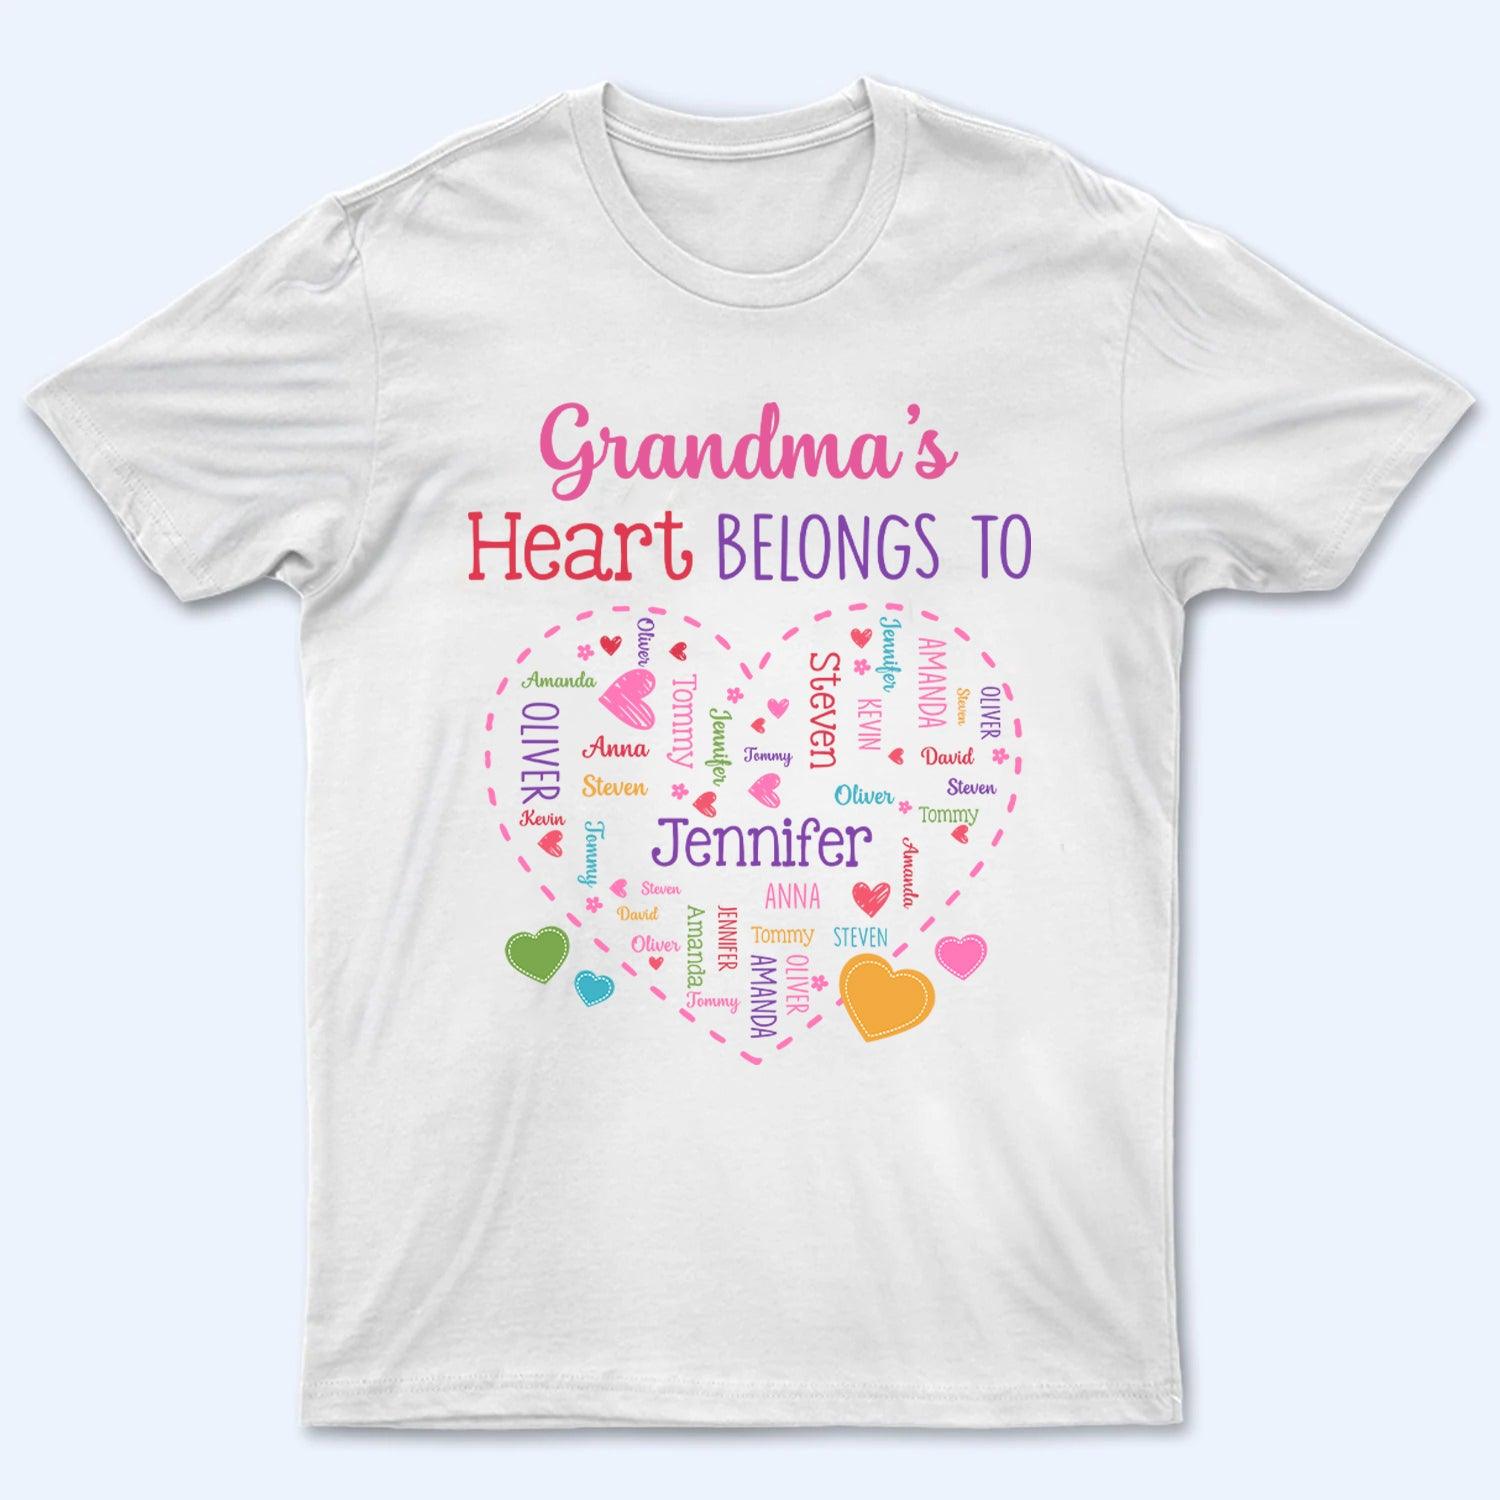 Grandma's Heart Belongs To - Personalized Custom T Shirt - Gift for Grandma/Nana/Mimi, Mom, Wife, Grandparent